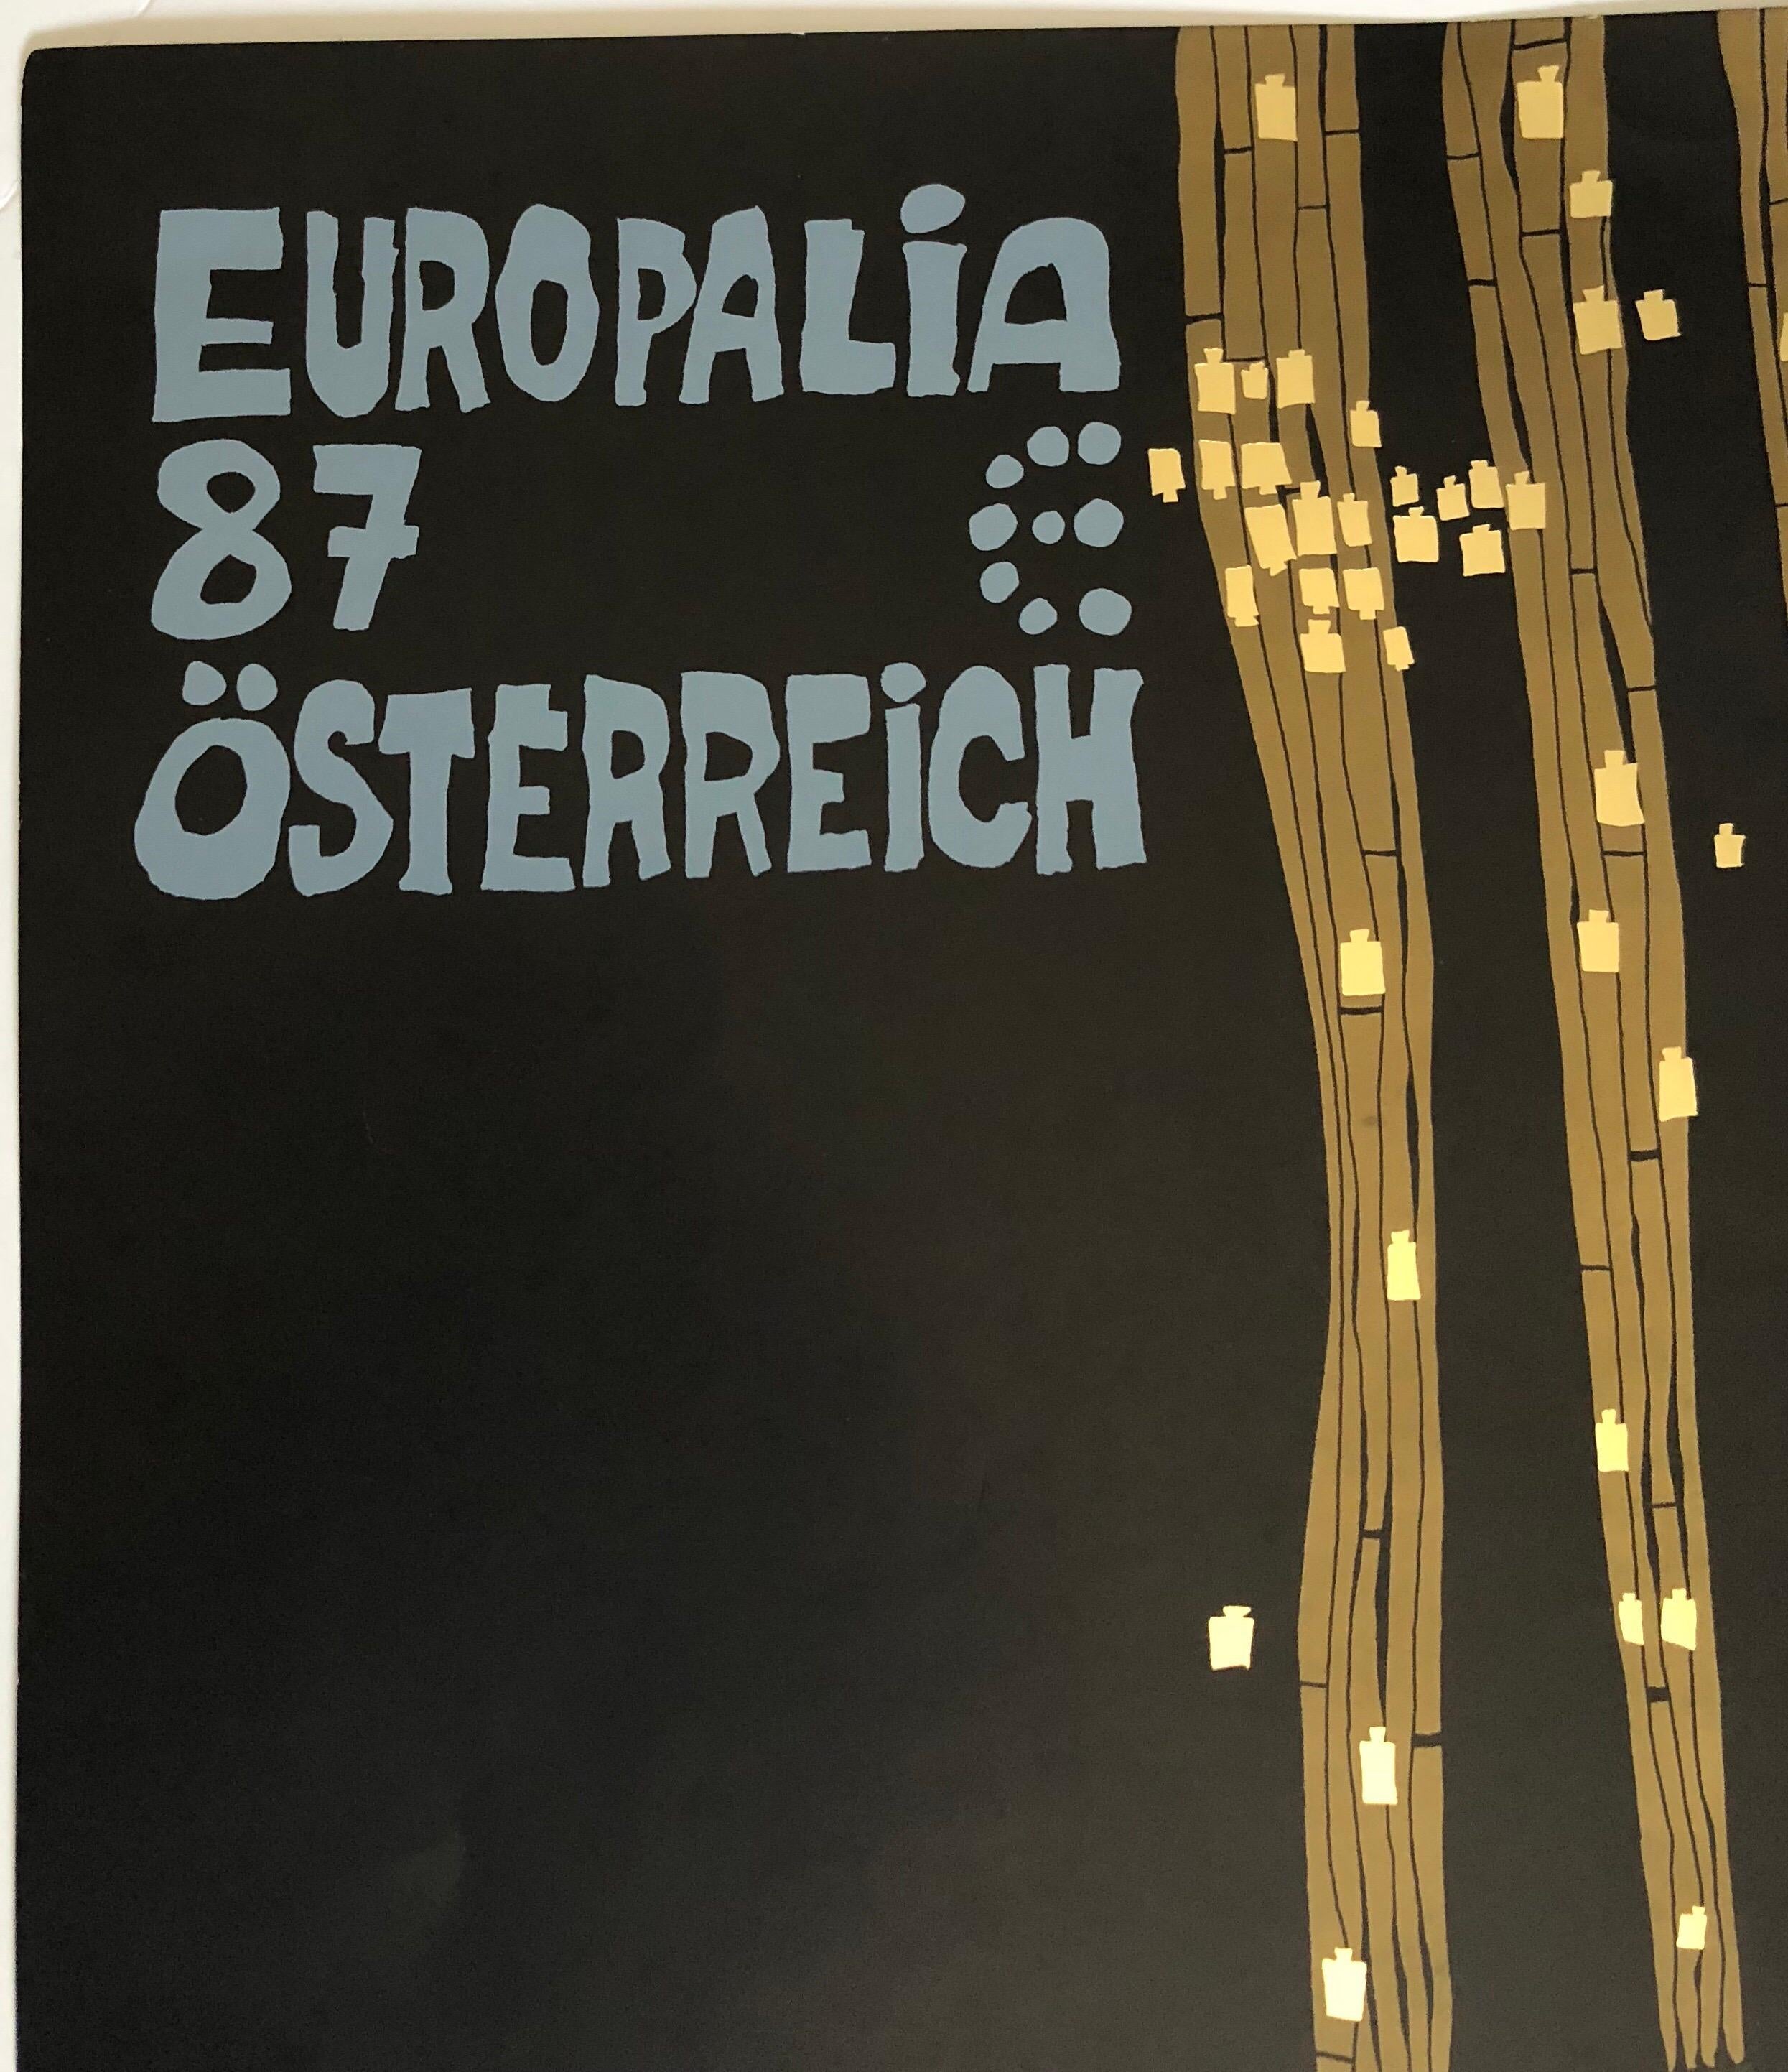 Europalia 87 Oesterreich (Austria) by Friedrich Hundertwasser – original vintage poster – offset lithograph with metal foil insets fine art  print
Copyright by Gruener Janura AG, Glarus/ Switzerland. Printed in Germany.
Europalia 87 Oesterreich 16